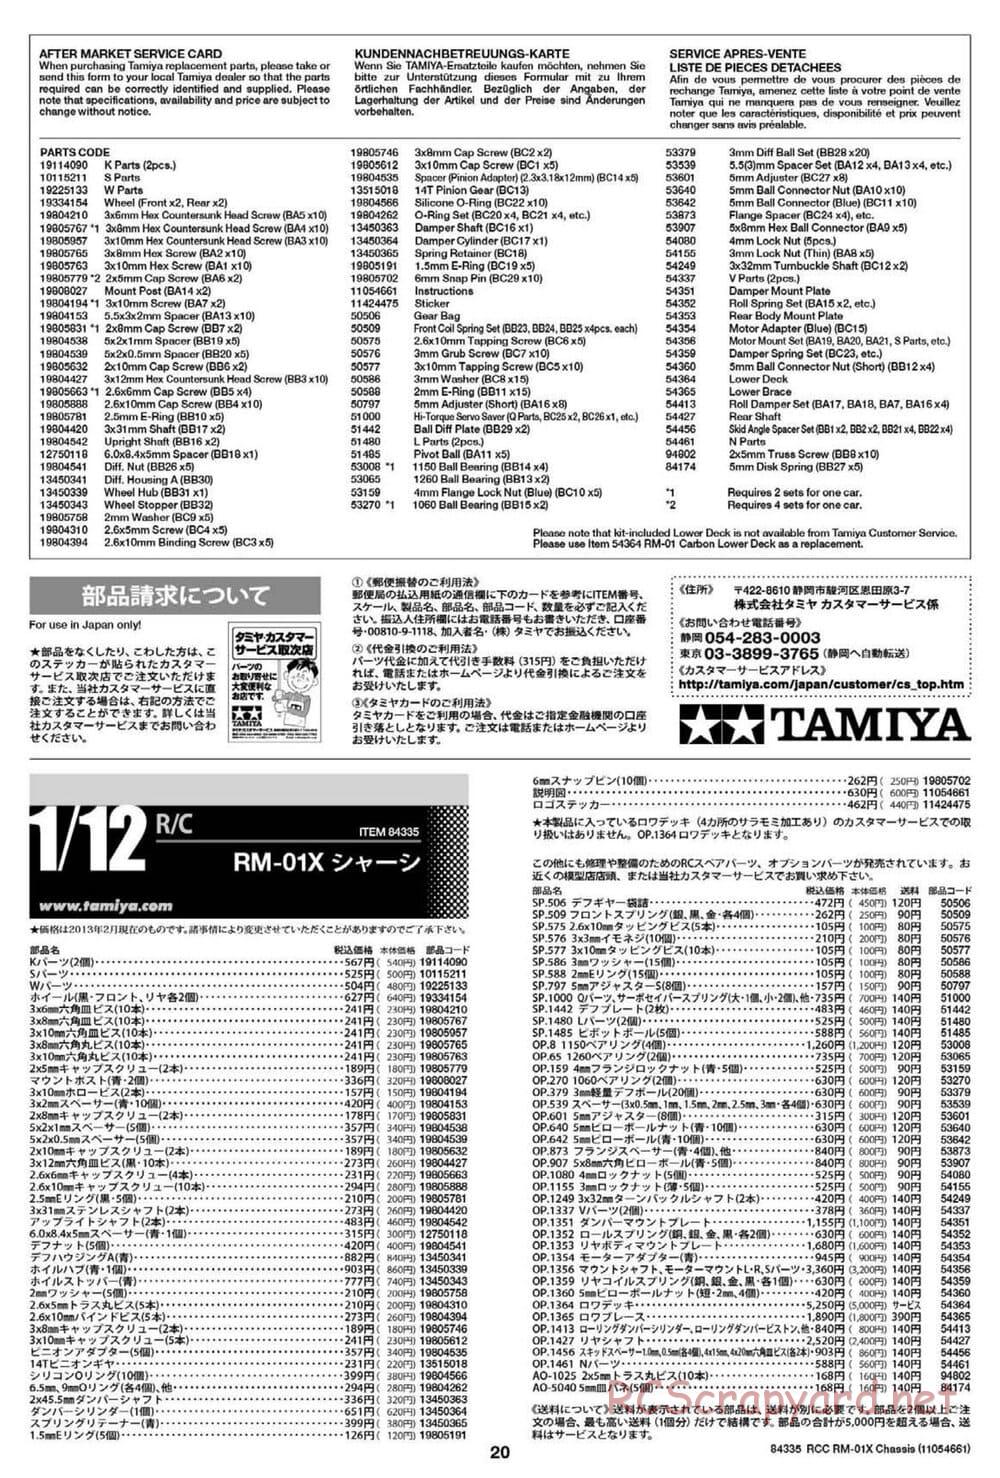 Tamiya - RM-01X Chassis - Manual - Page 20